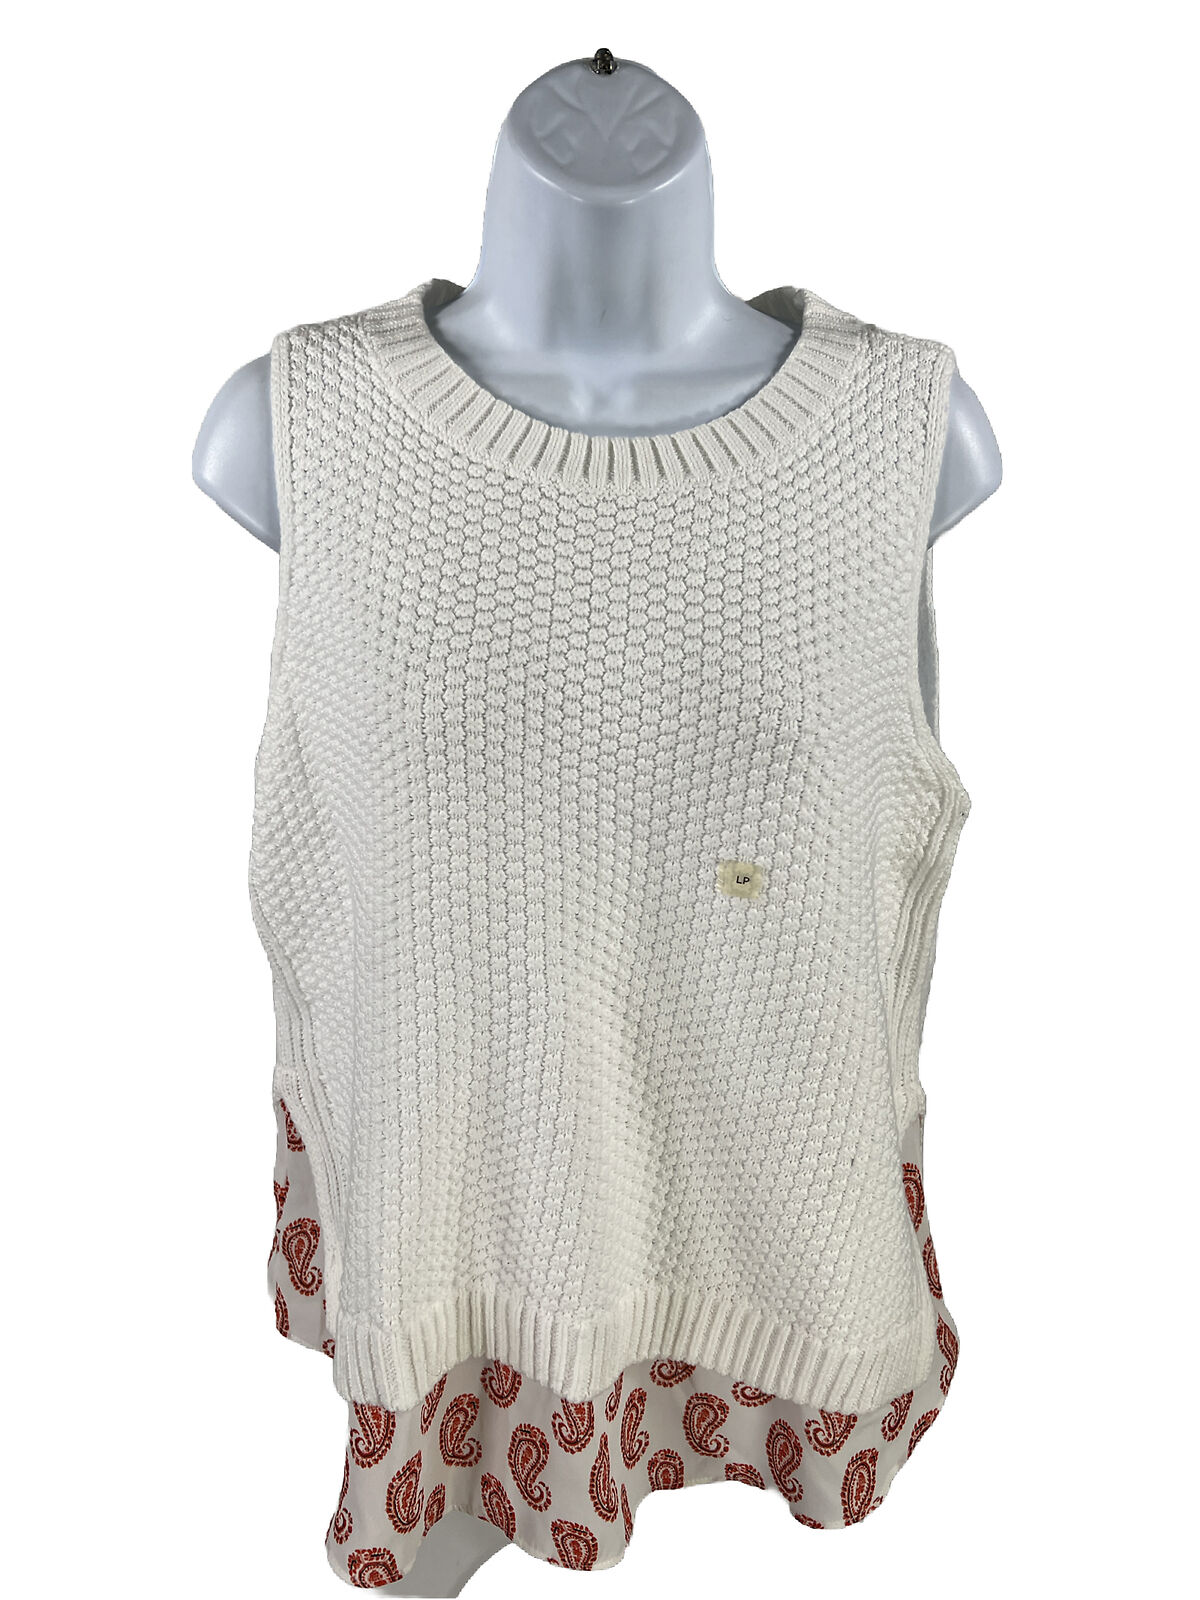 NEW LOFT Women's White Sleeveless Knit Tank Sweater - L Petite